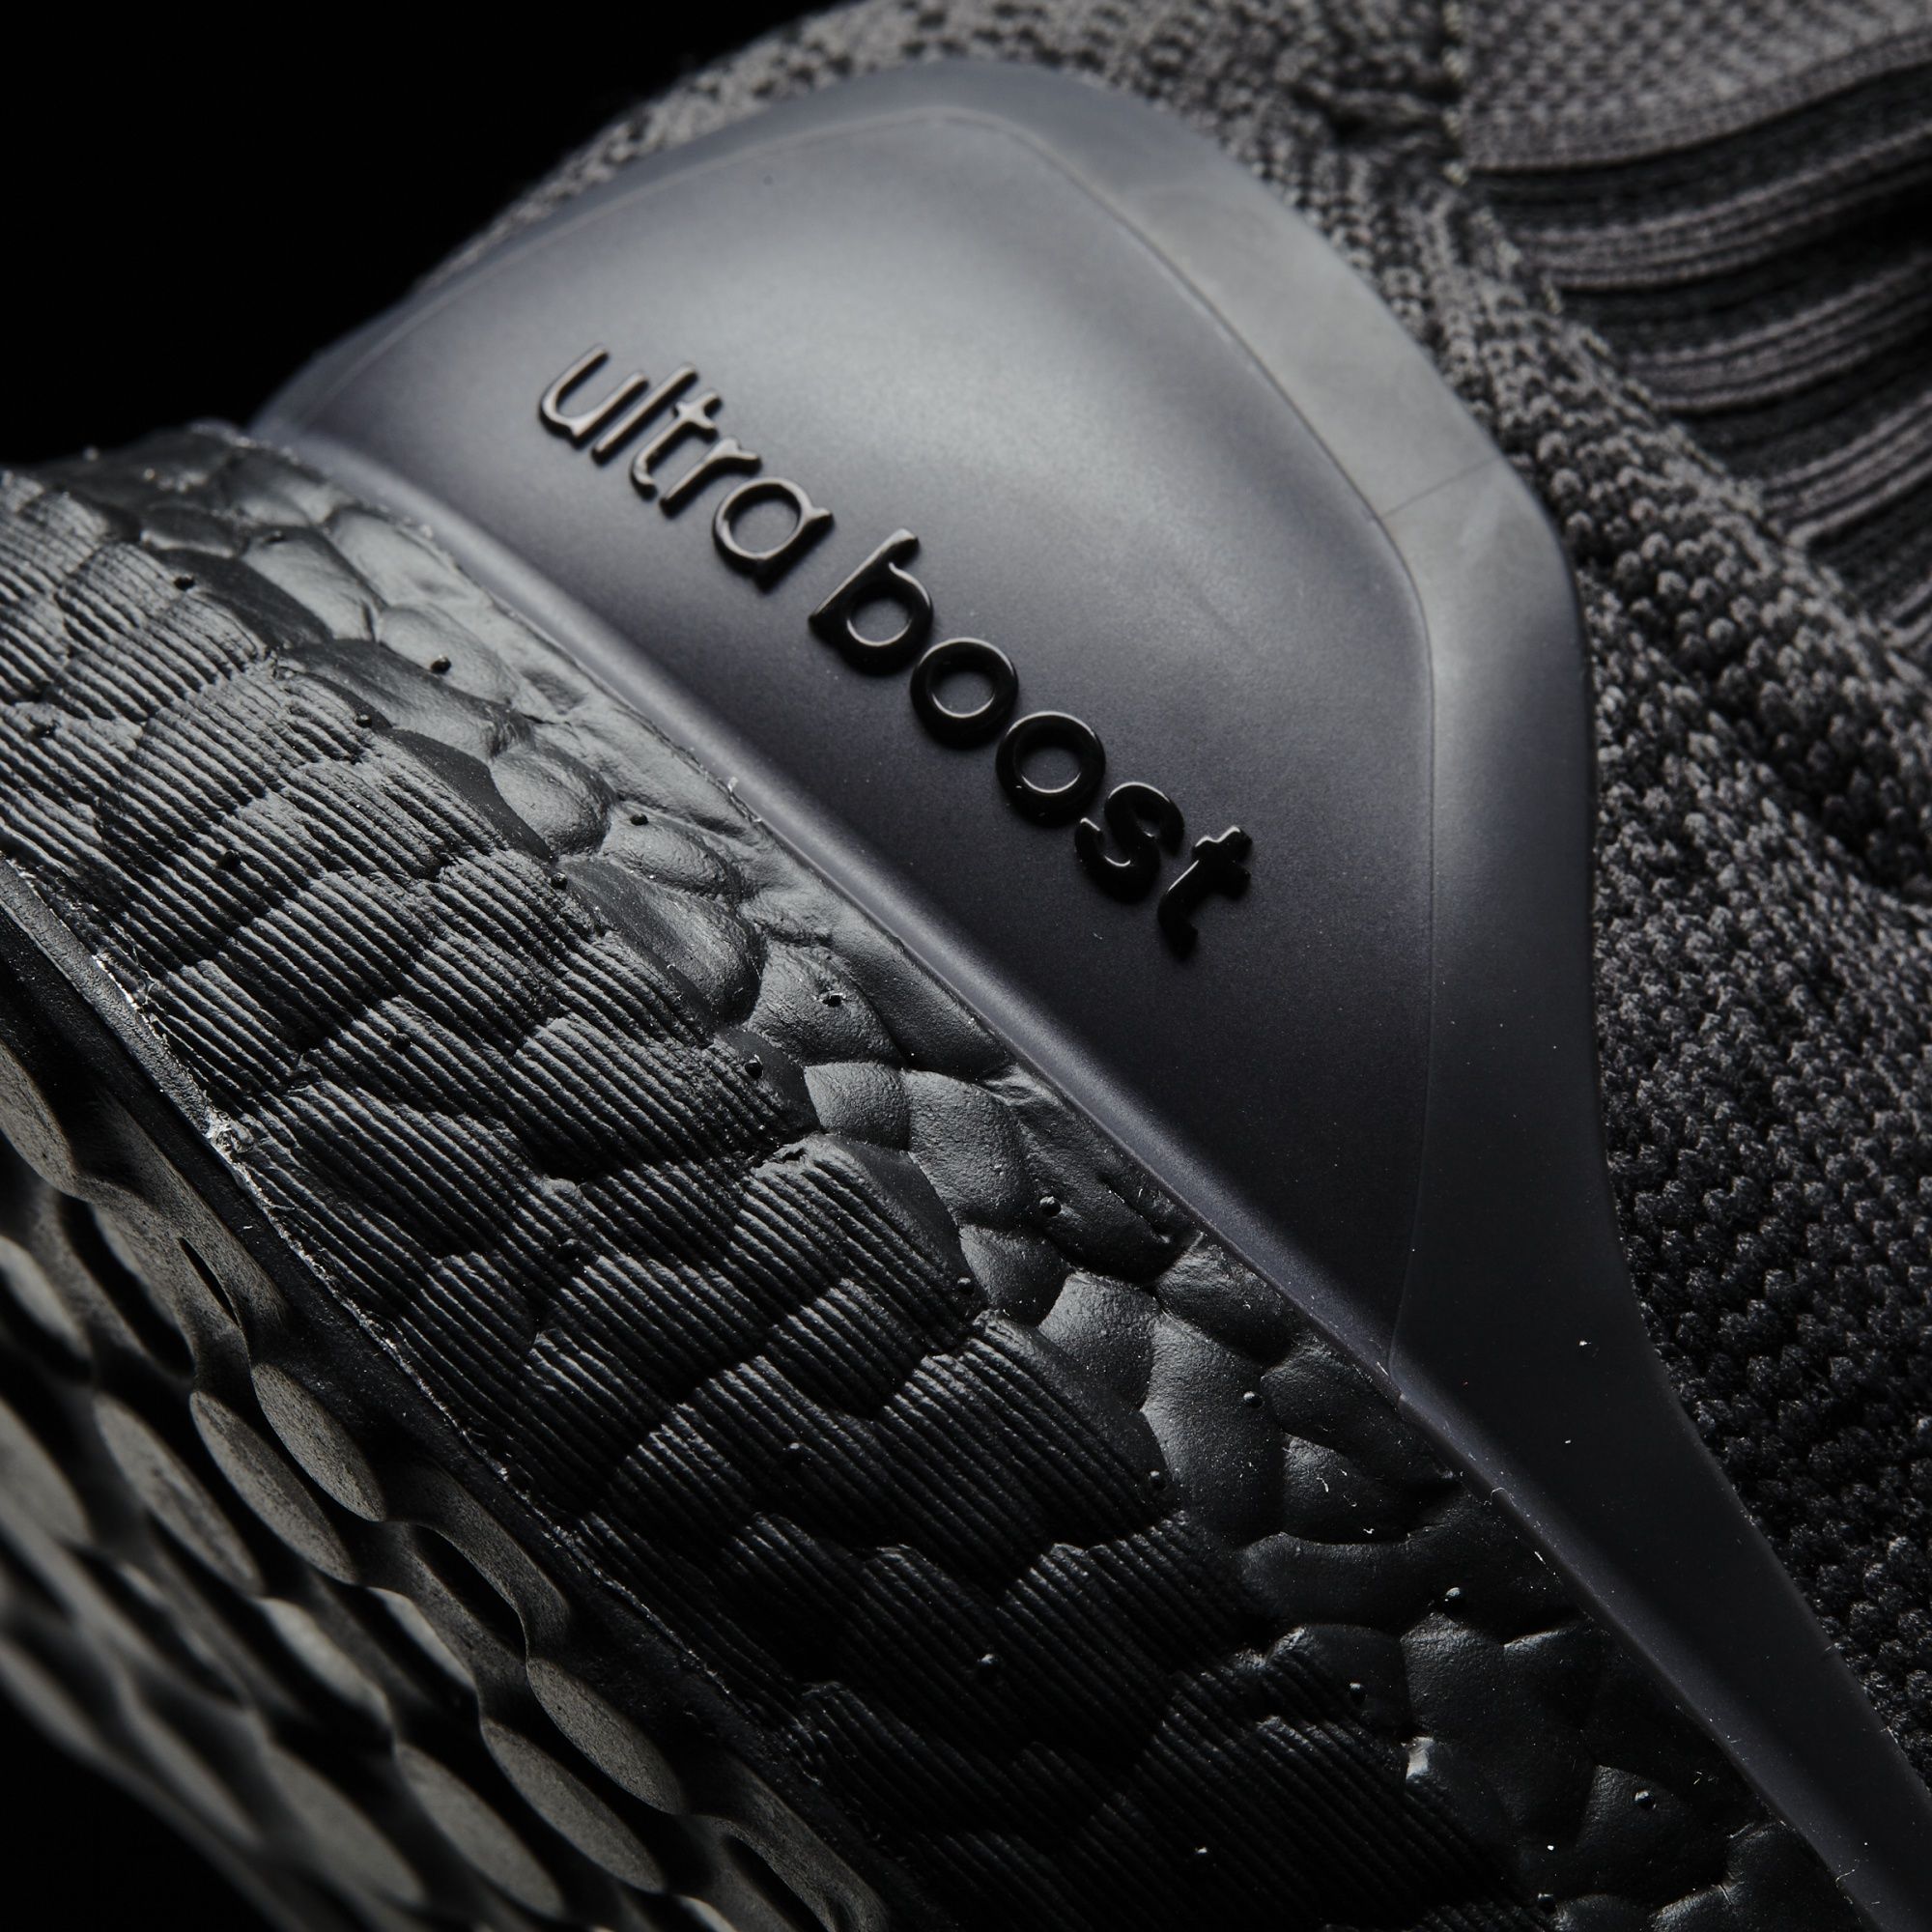 Adidas Ultra Boost Uncaged
« Solid Grey »